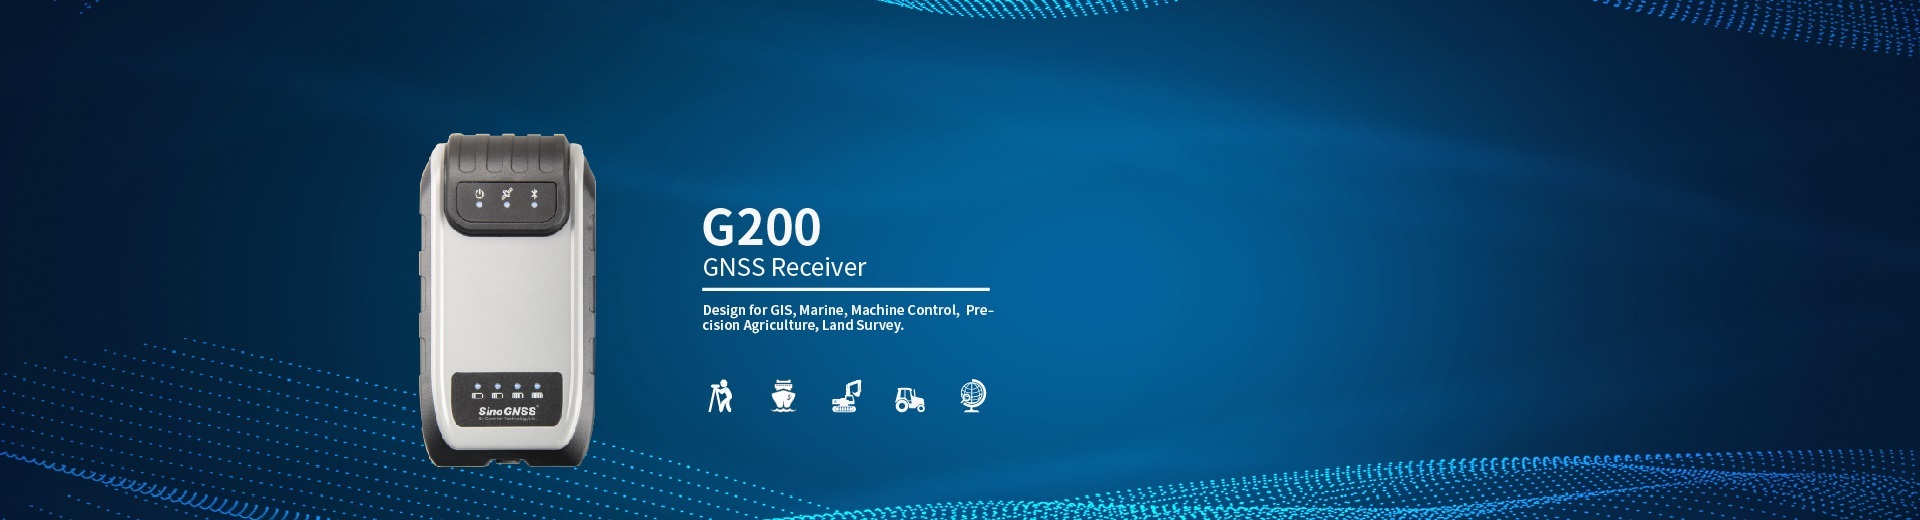 G200 GNSS Receiver